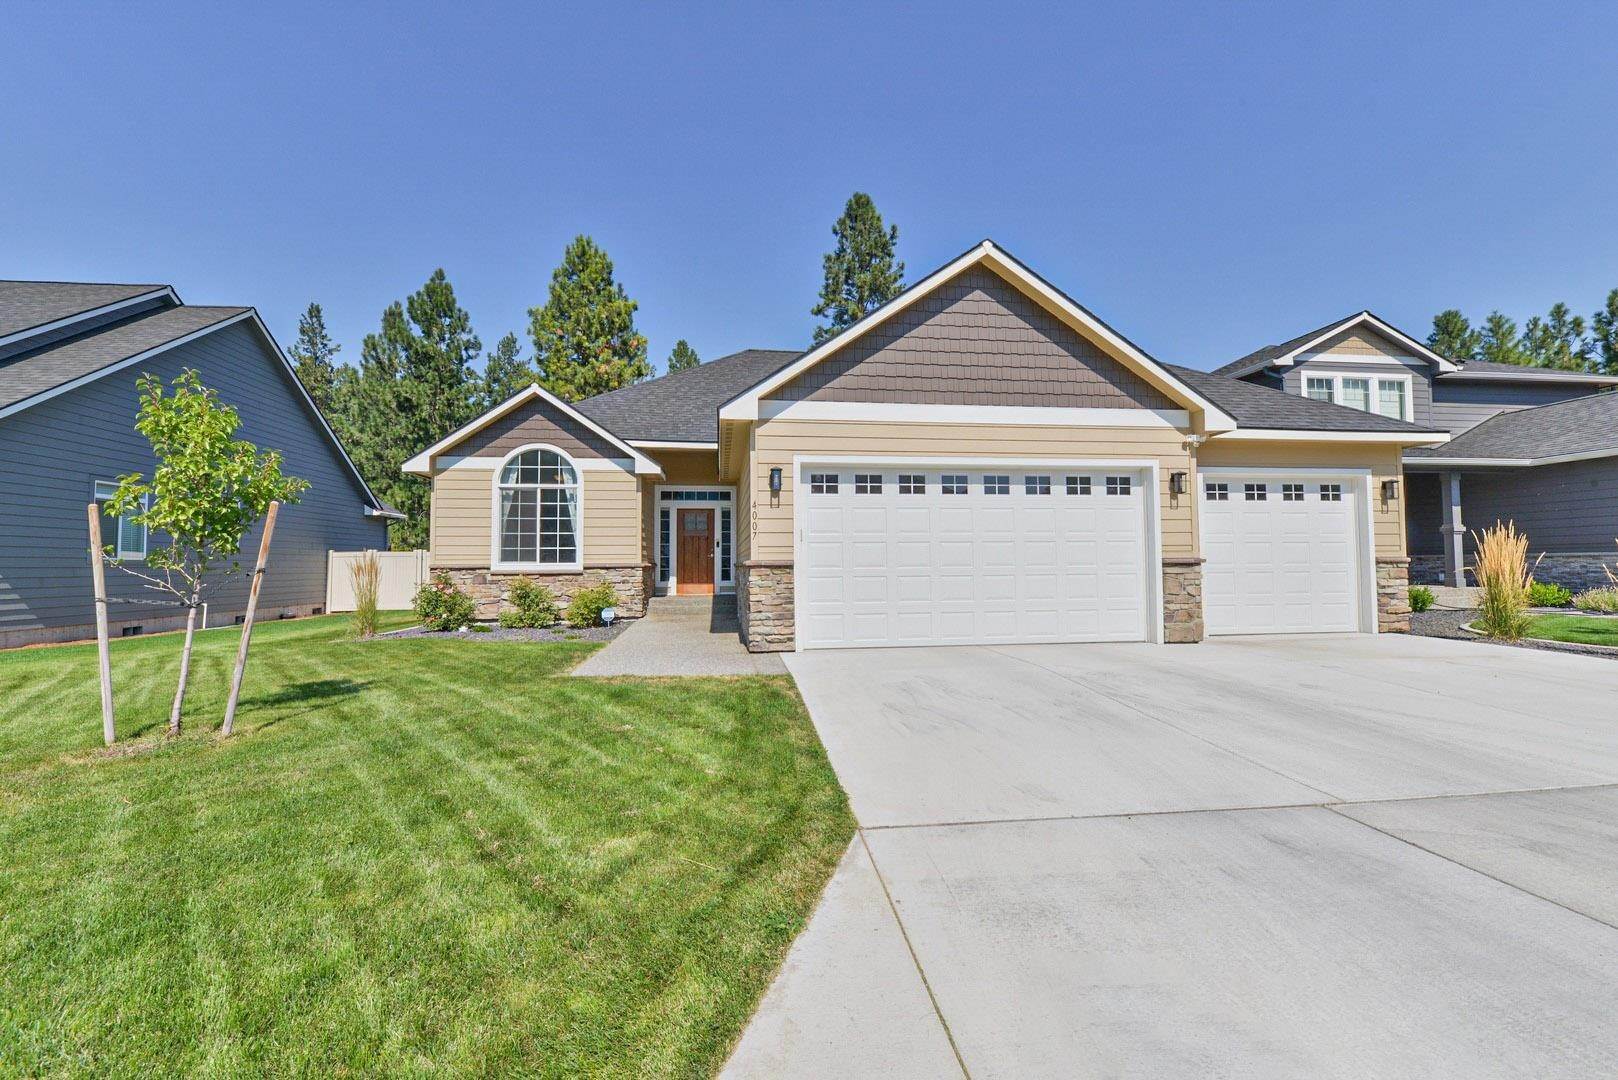 2. Single Family Homes for Sale at 4007 S University Court Spokane Valley, Washington 99206 United States